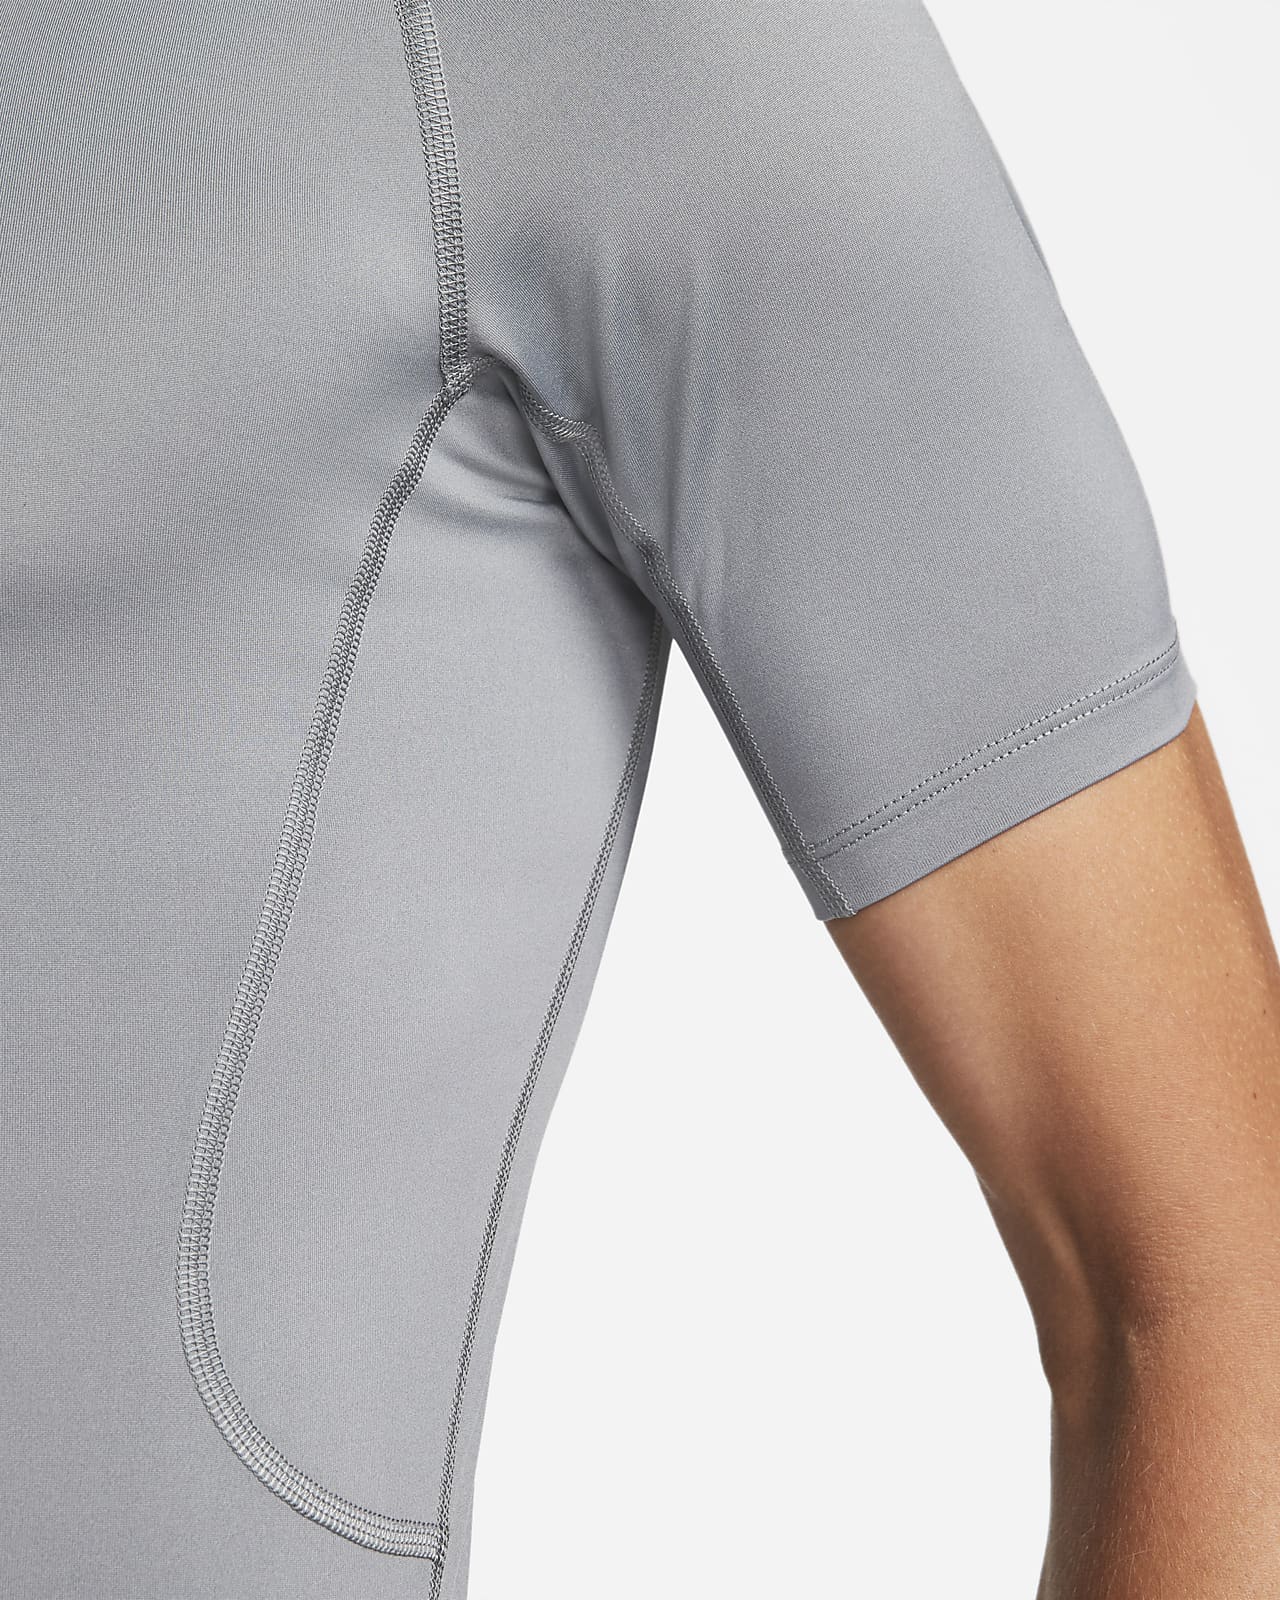 Nike Men's Dri-Fit Pro Compression Short Sleeve T-shirt Sports Gym Tight Tee